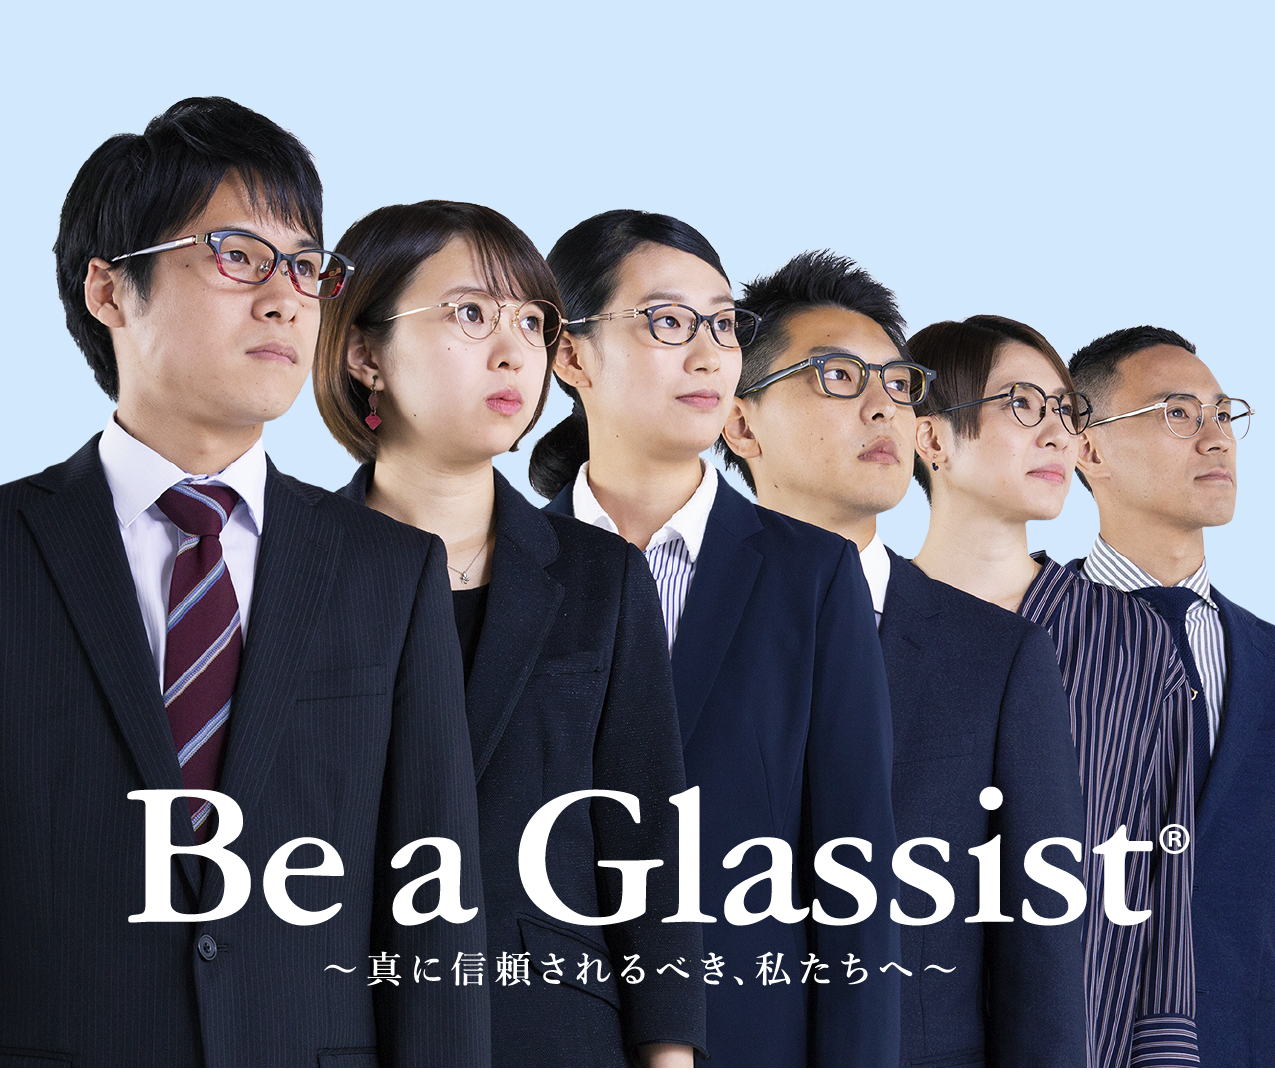 be a glassist ～真に信頼されるべき、私たちへ～